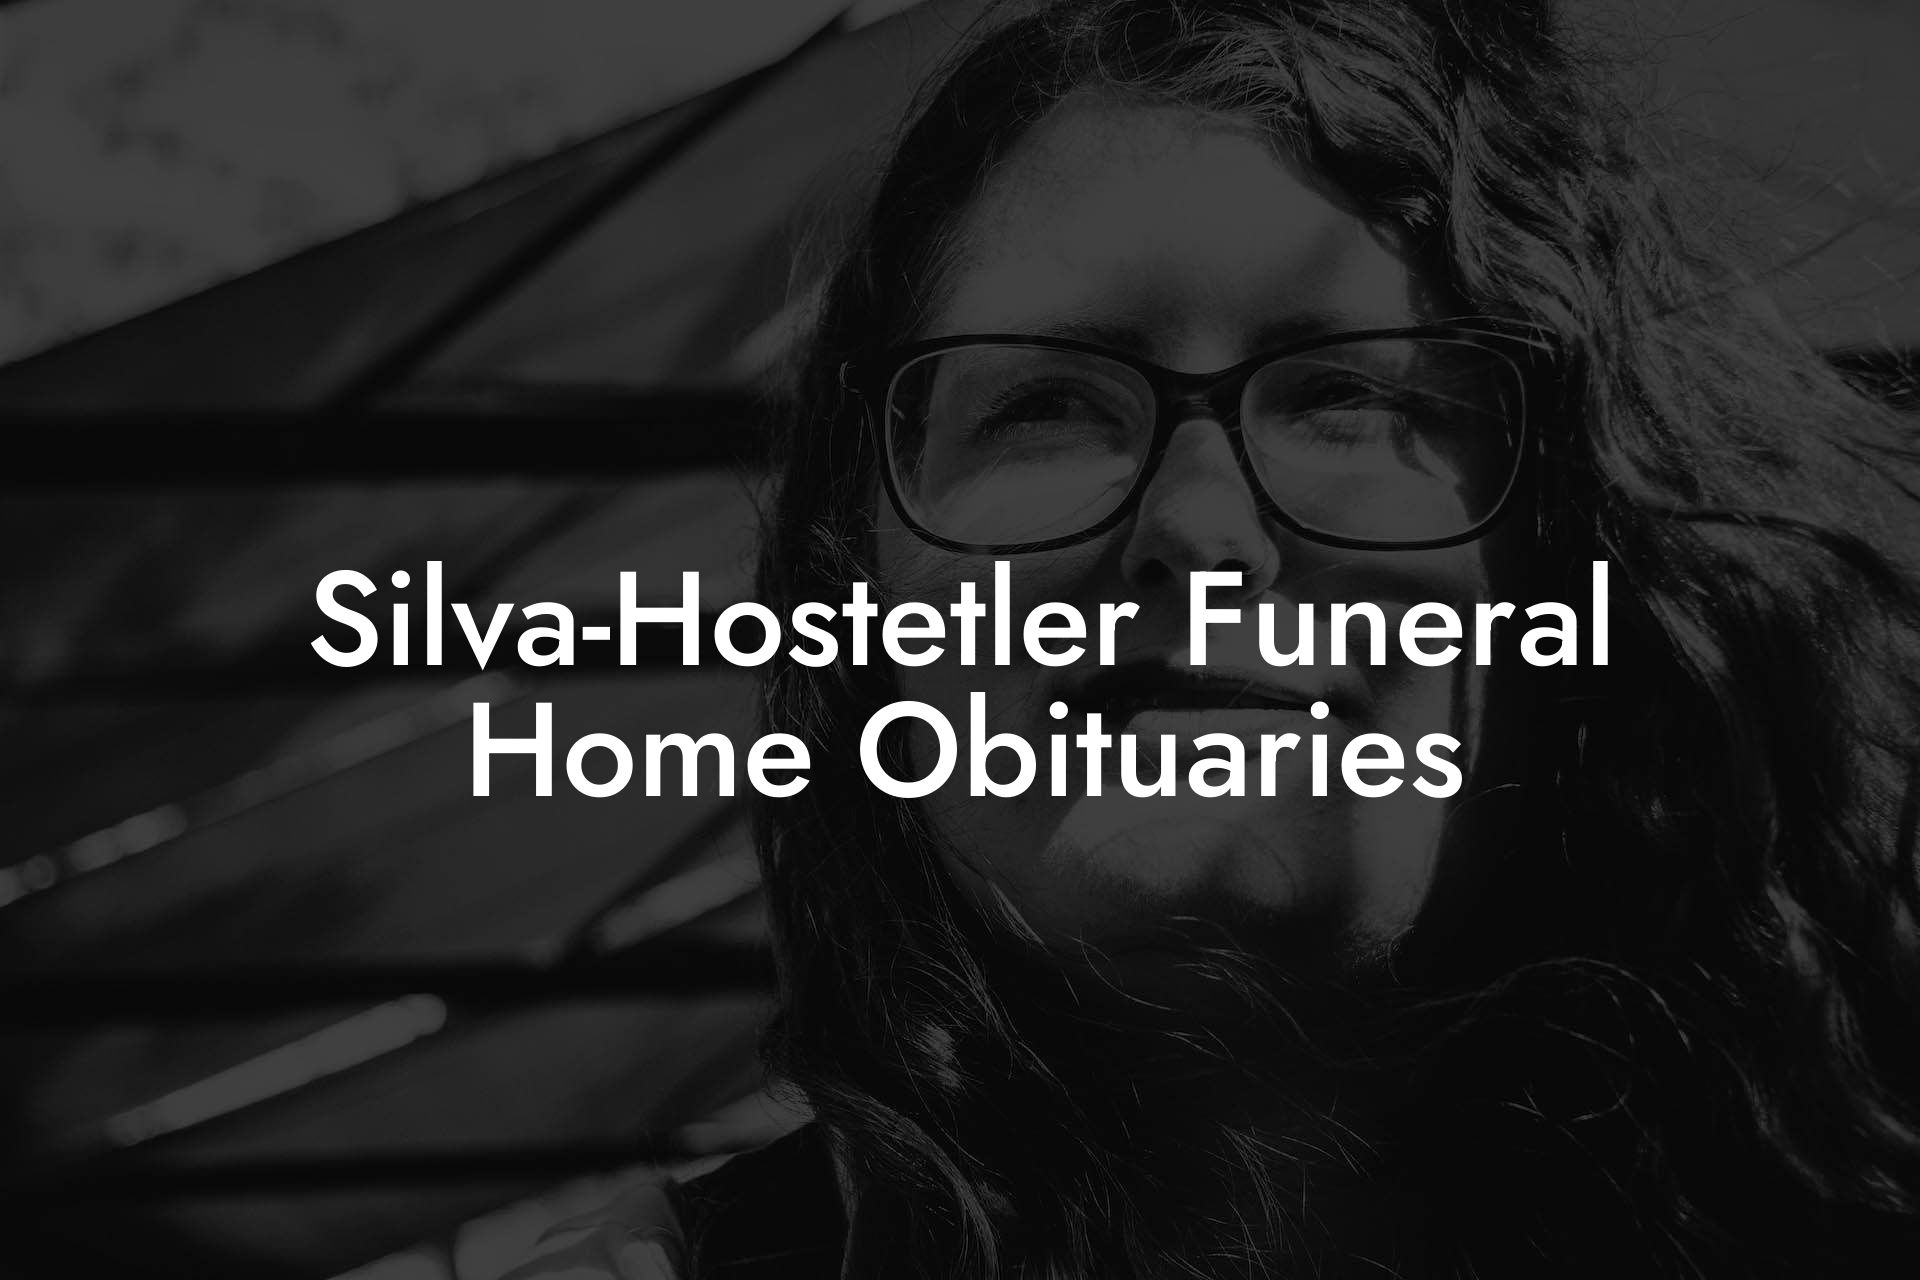 Silva-Hostetler Funeral Home Obituaries